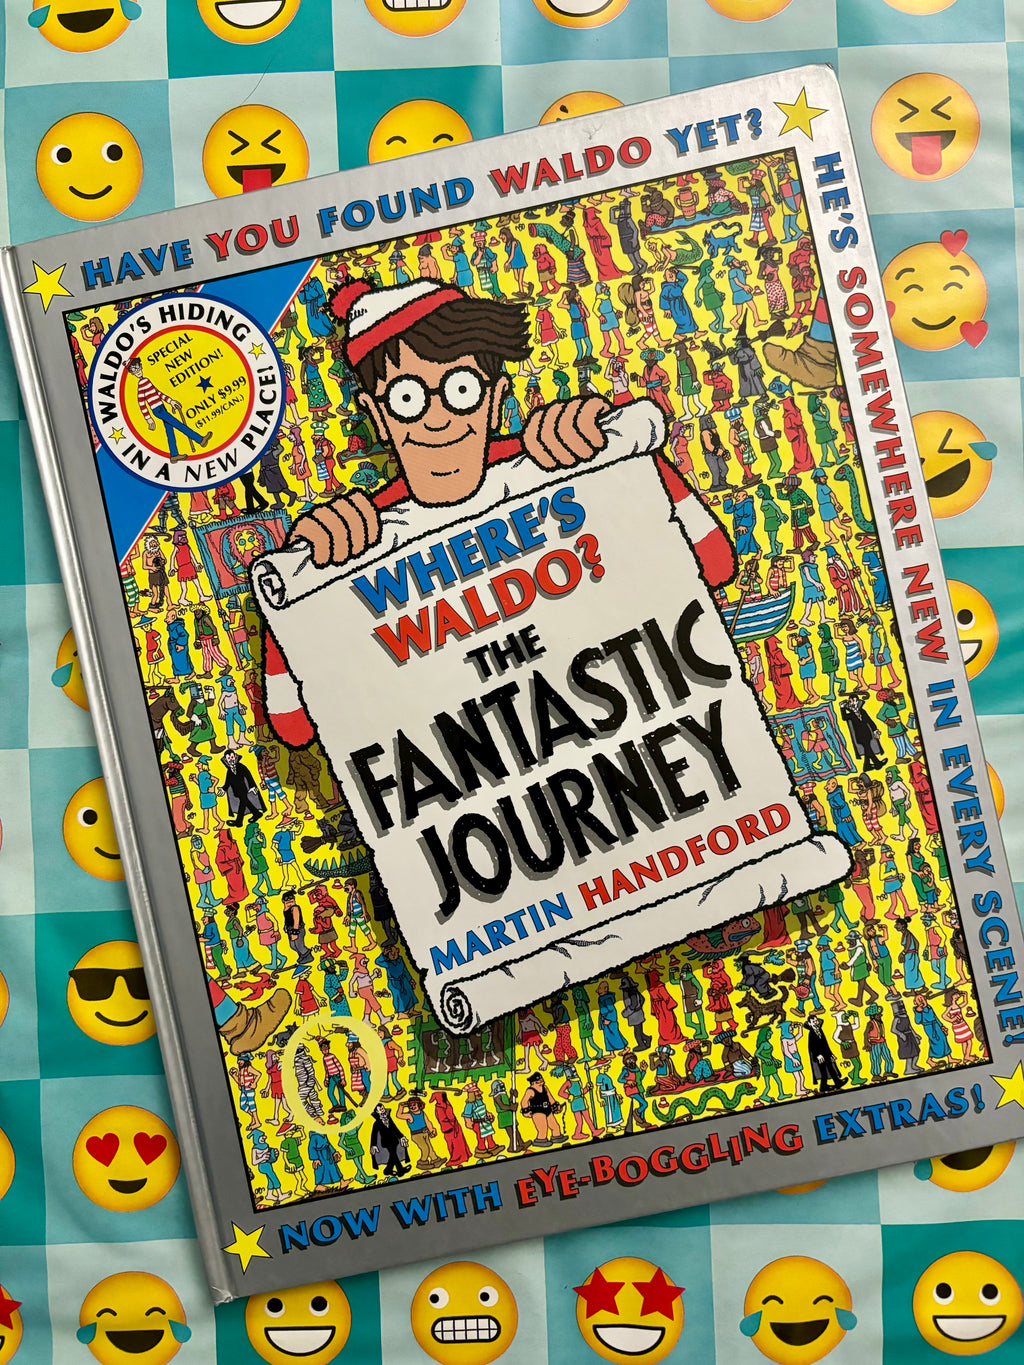 Where's Waldo: The Fantastic Journey- By Martin Handford